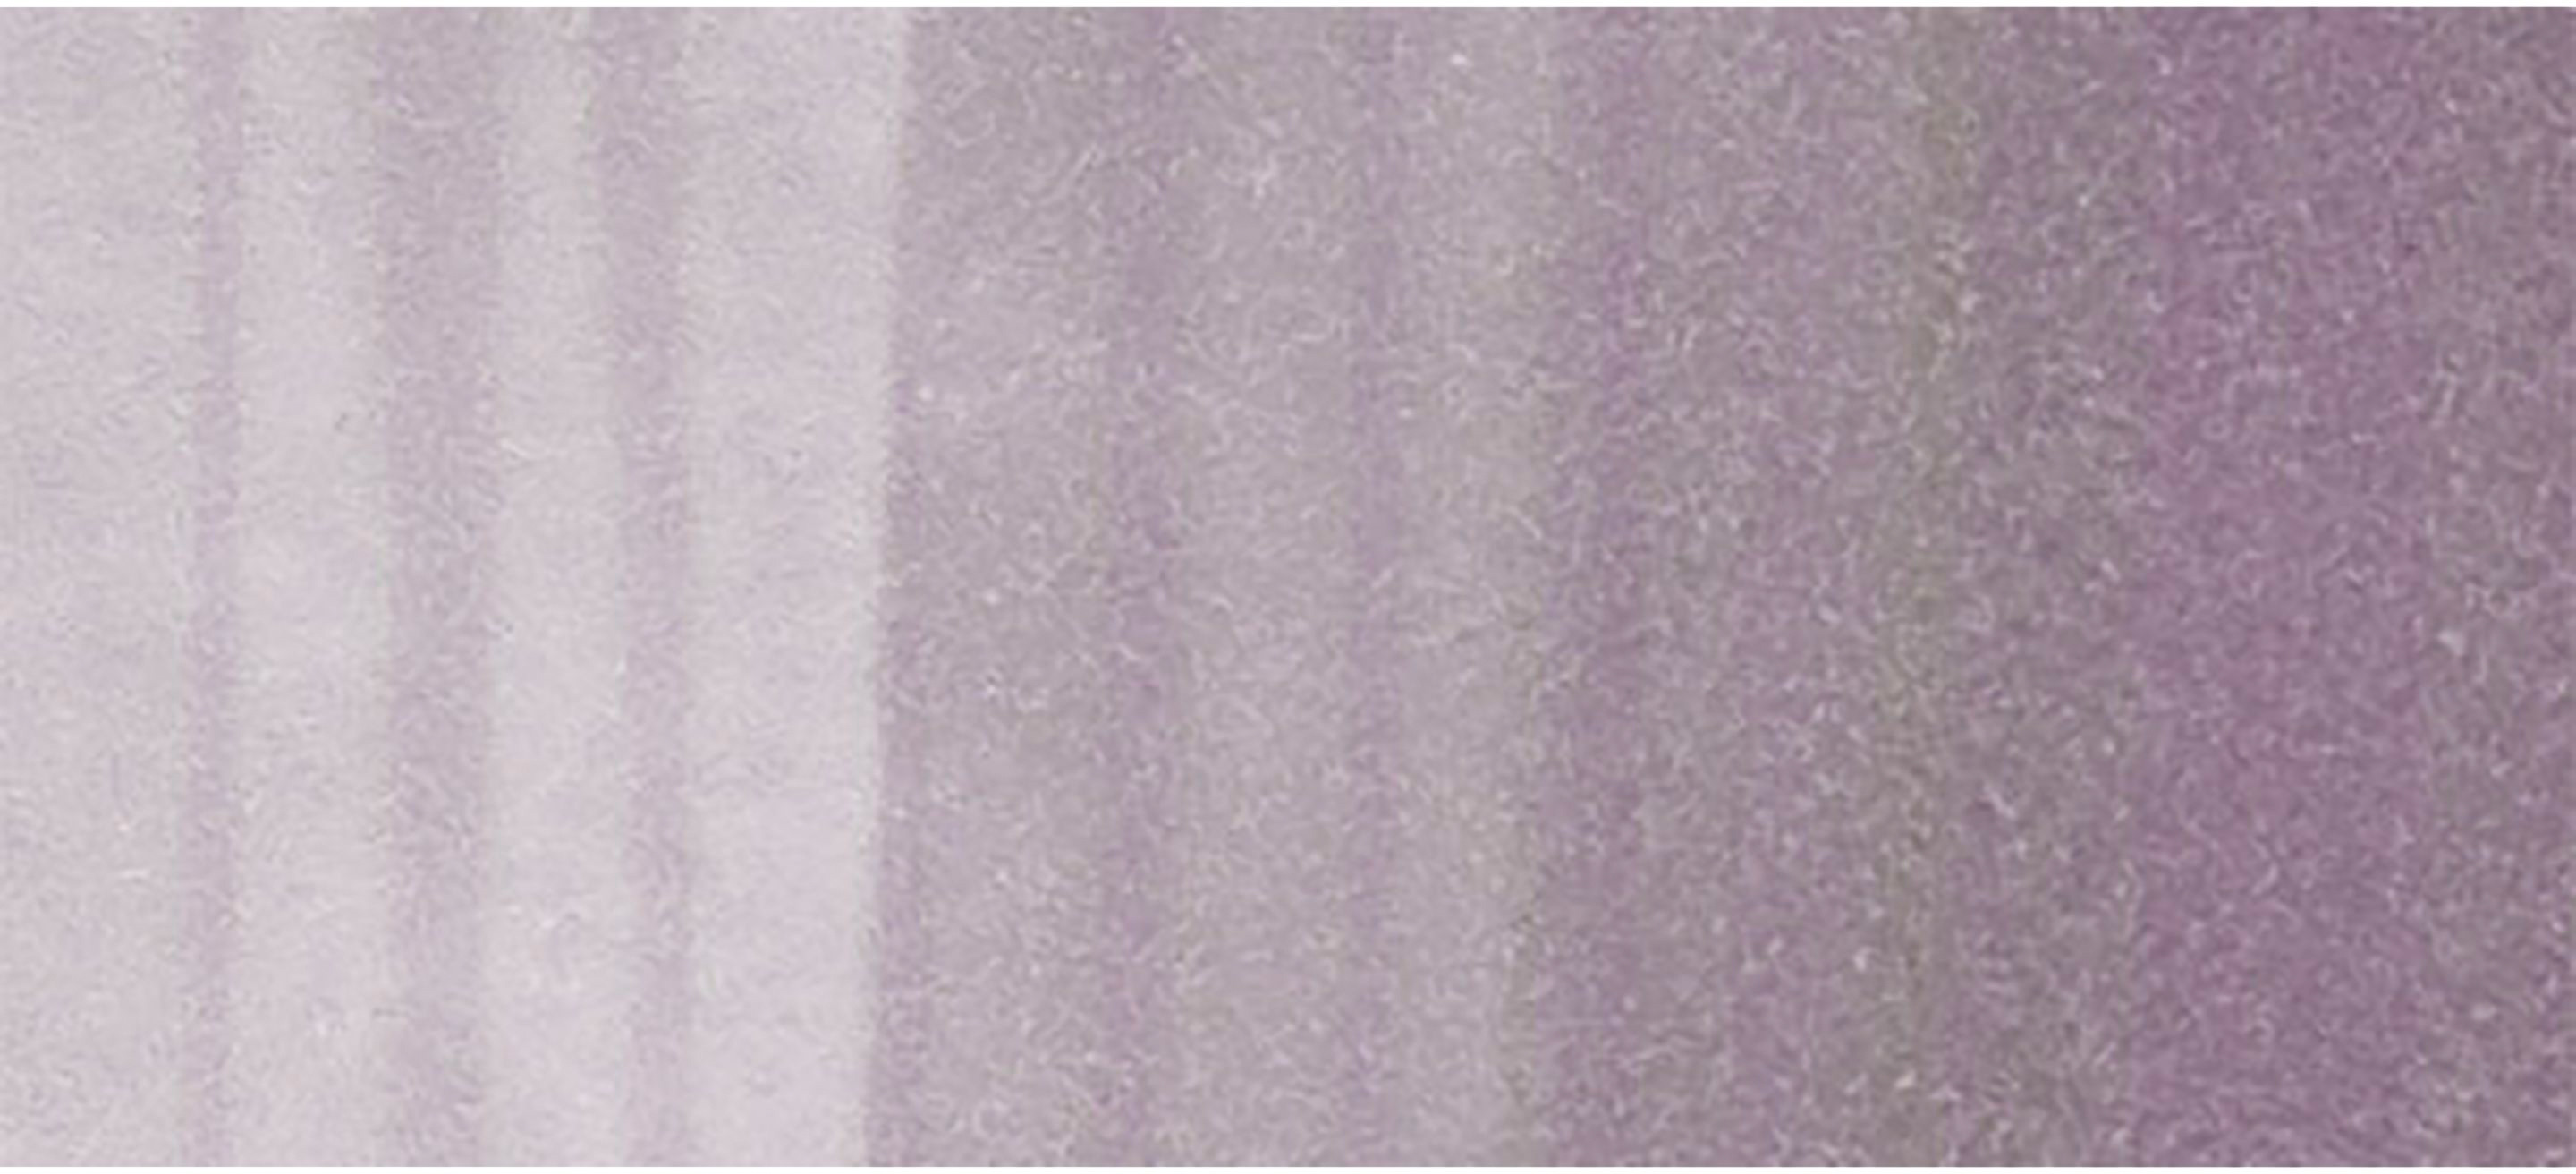 COPIC Marker Sketch 21075302 BV20 - Dull Lavender